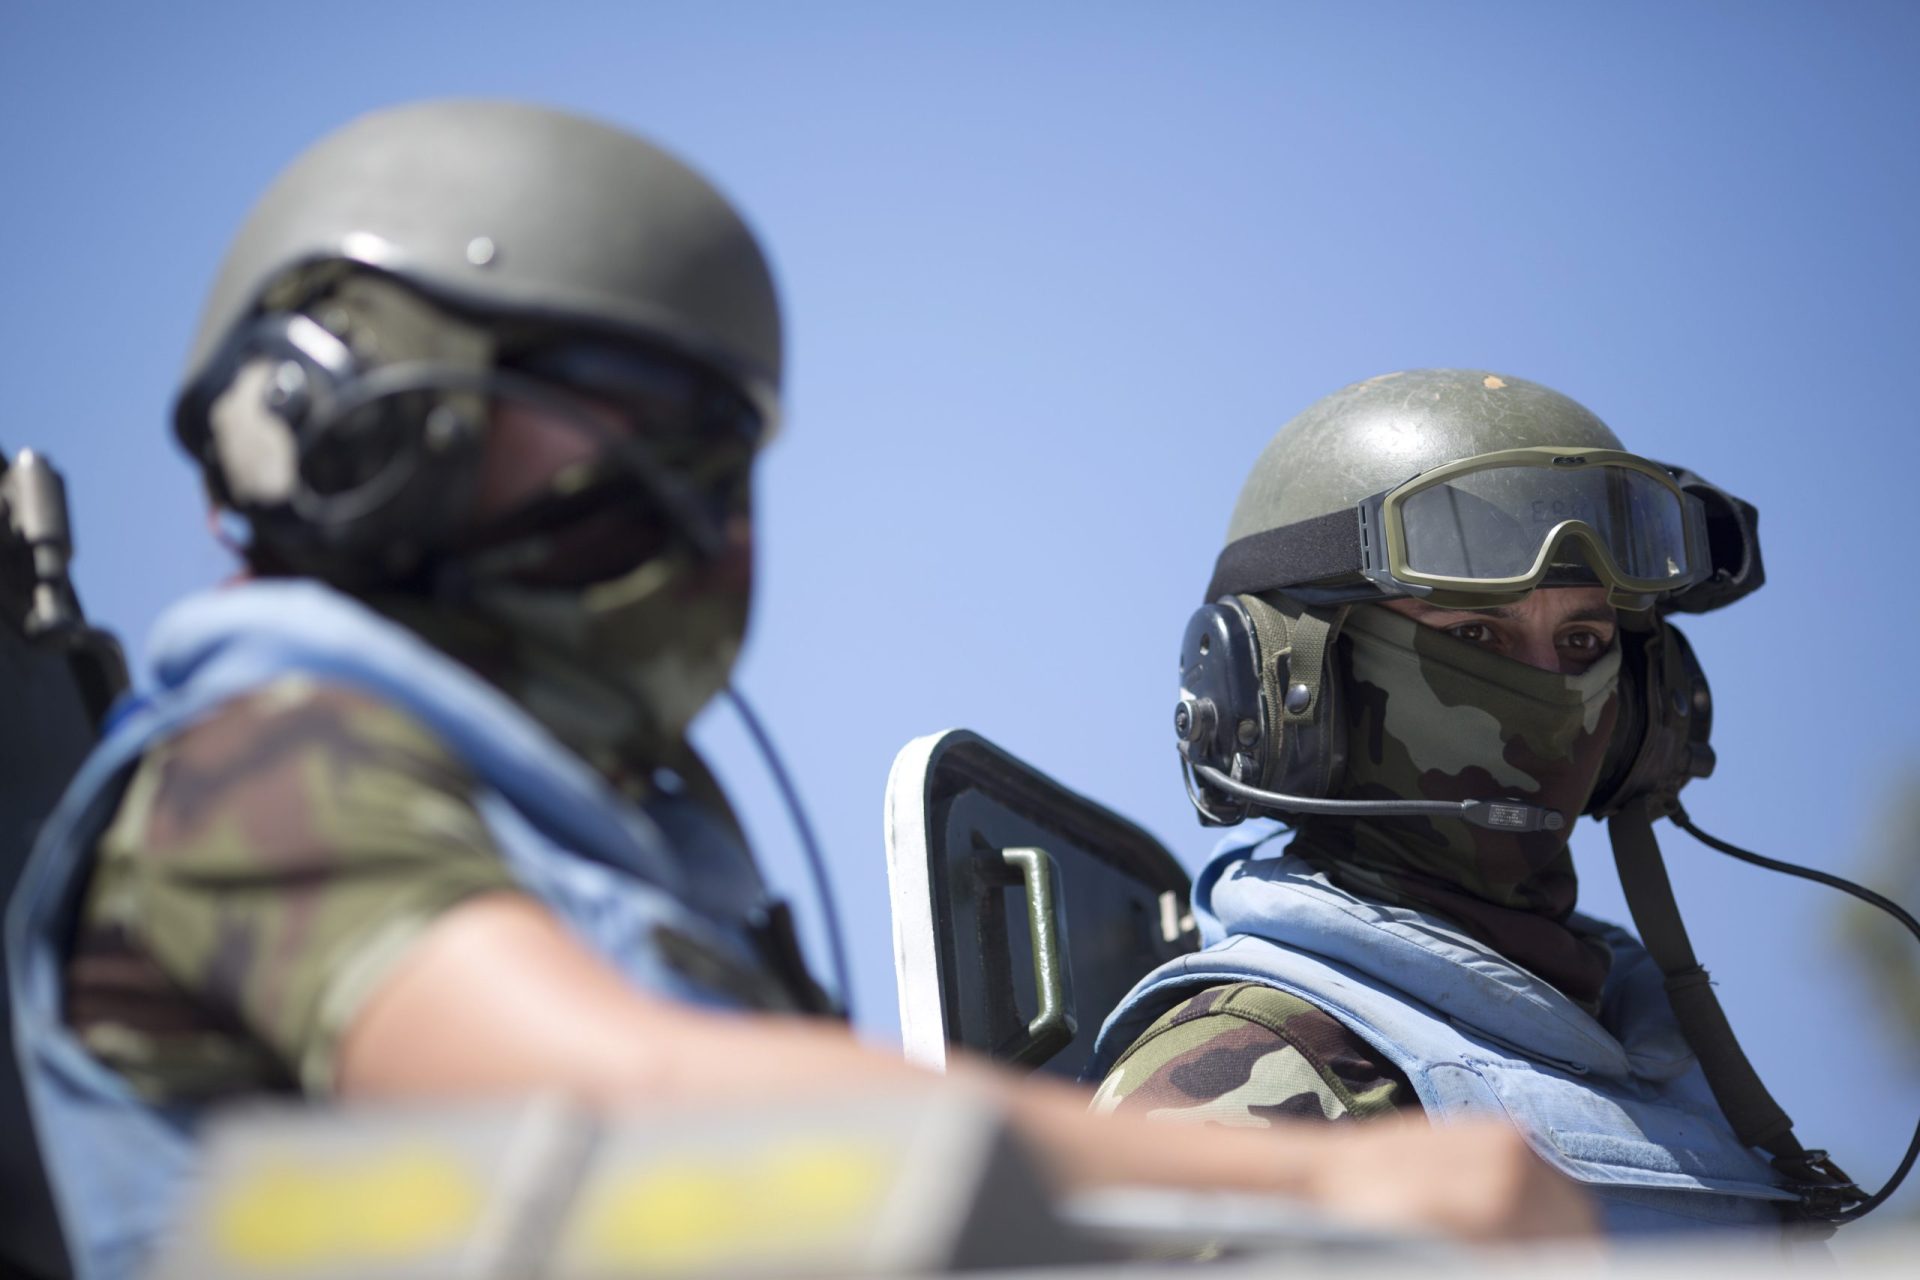 43 capacetes azuis capturados na Síria